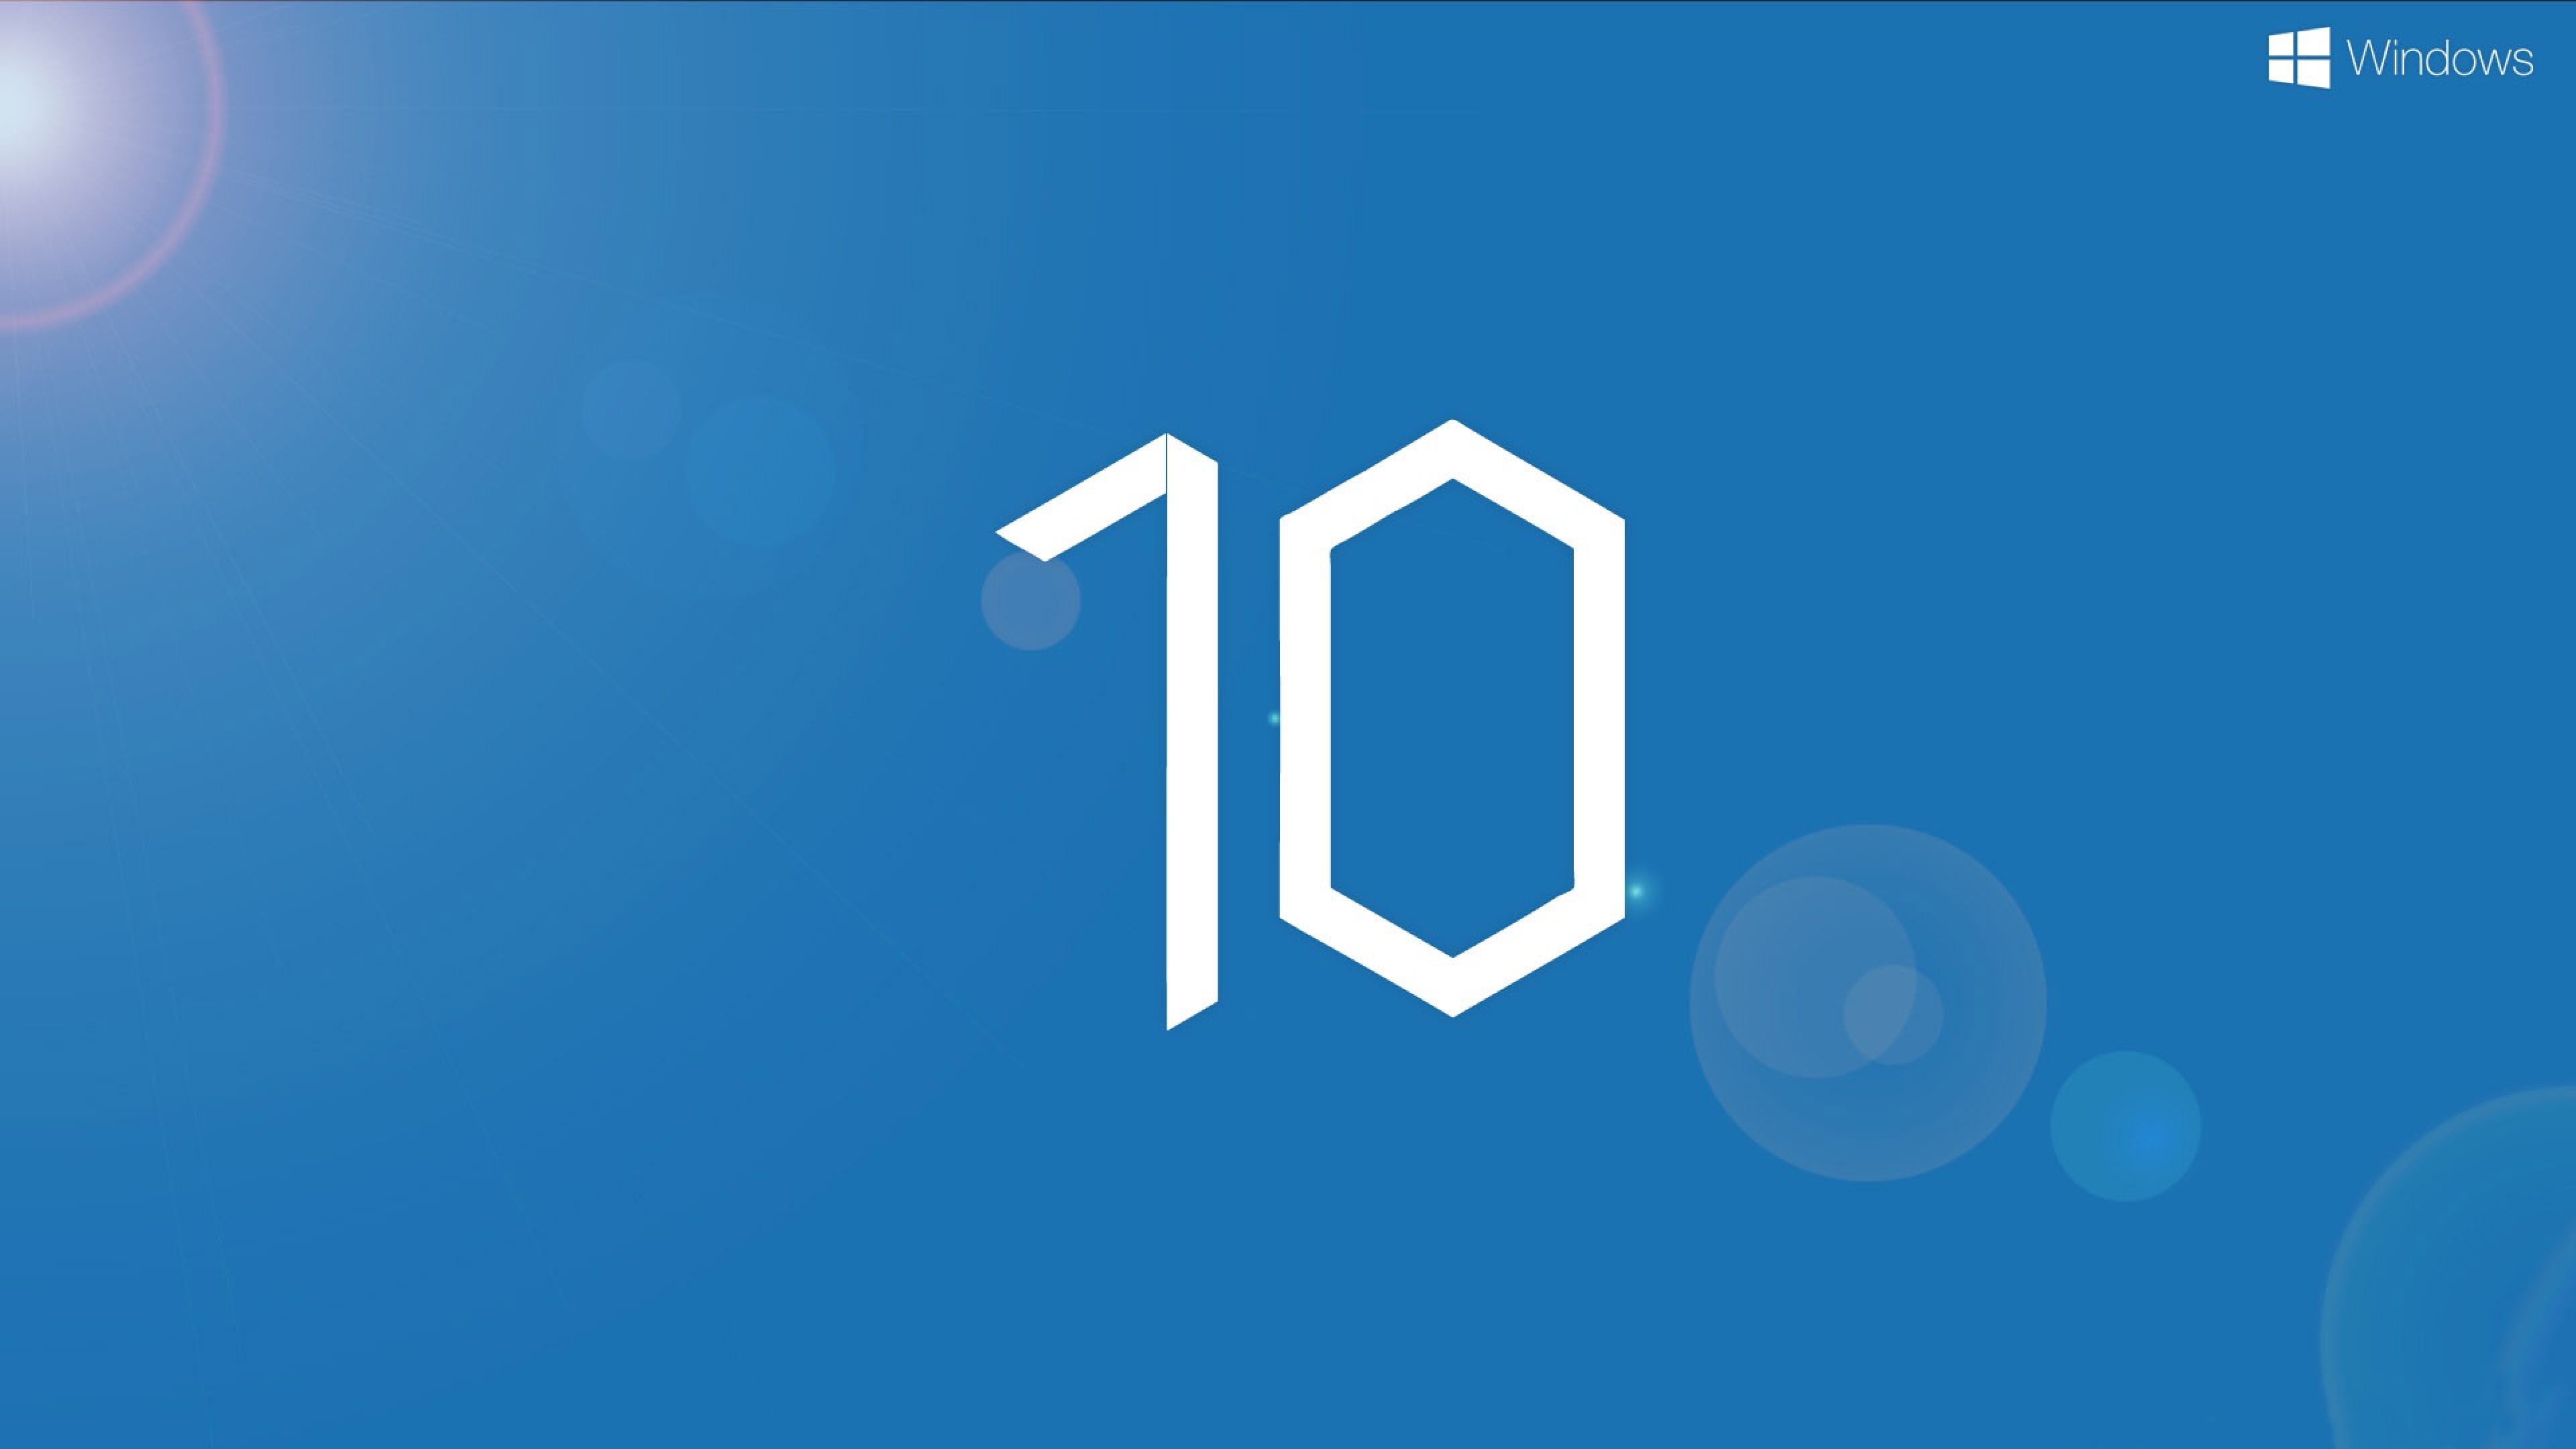 Windows 10 4K Wallpapers   Ultra HD Top 15